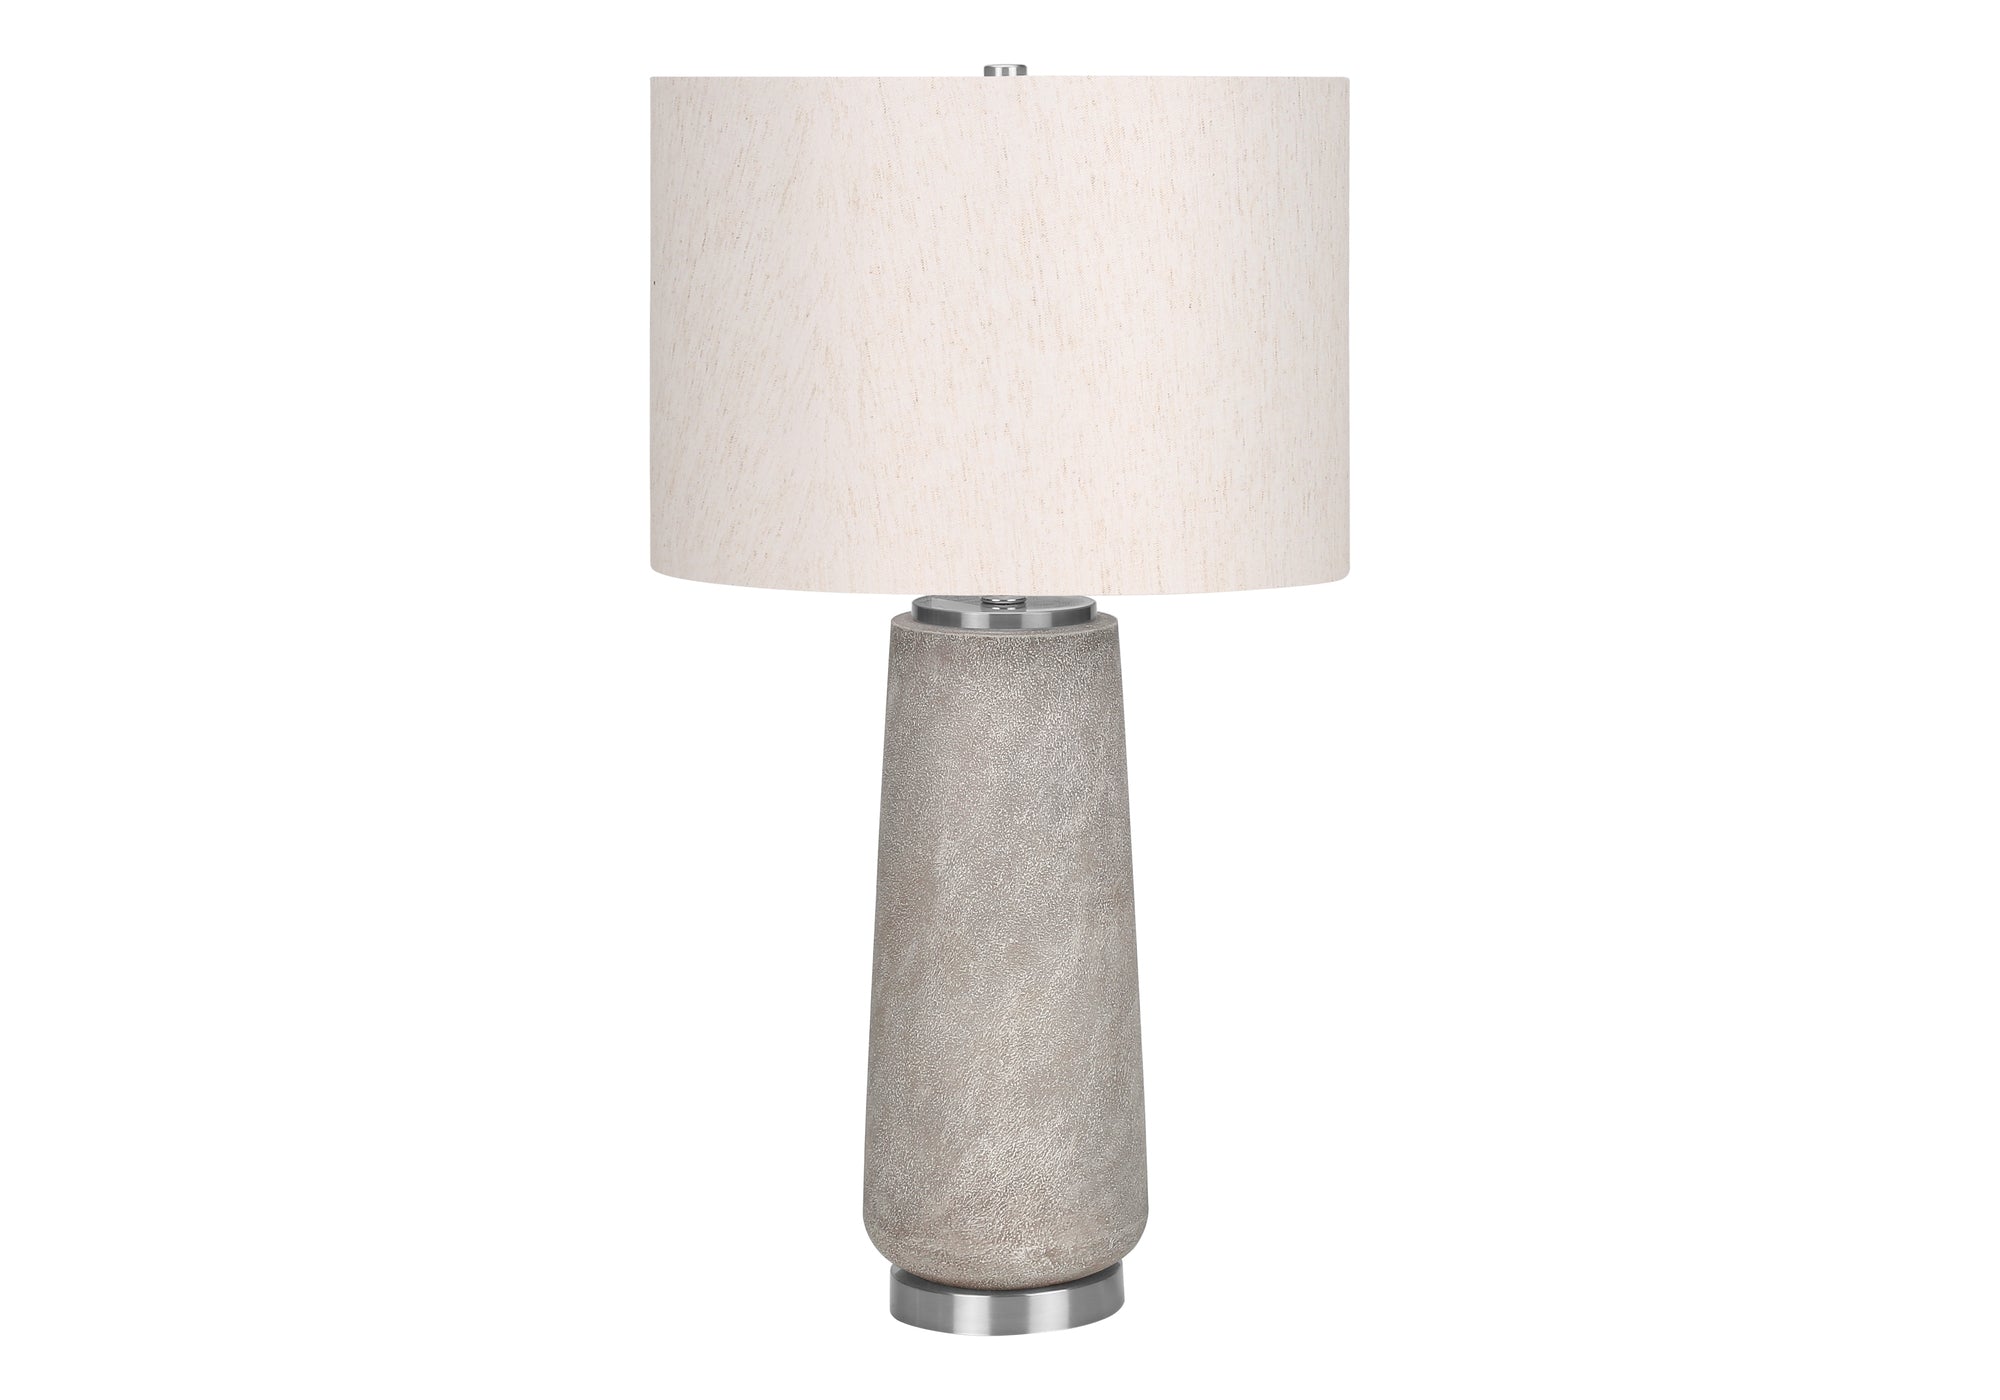 MN-469712    Lighting, 29"H, Table Lamp, Grey Resin, Ivory / Cream Shade, Modern